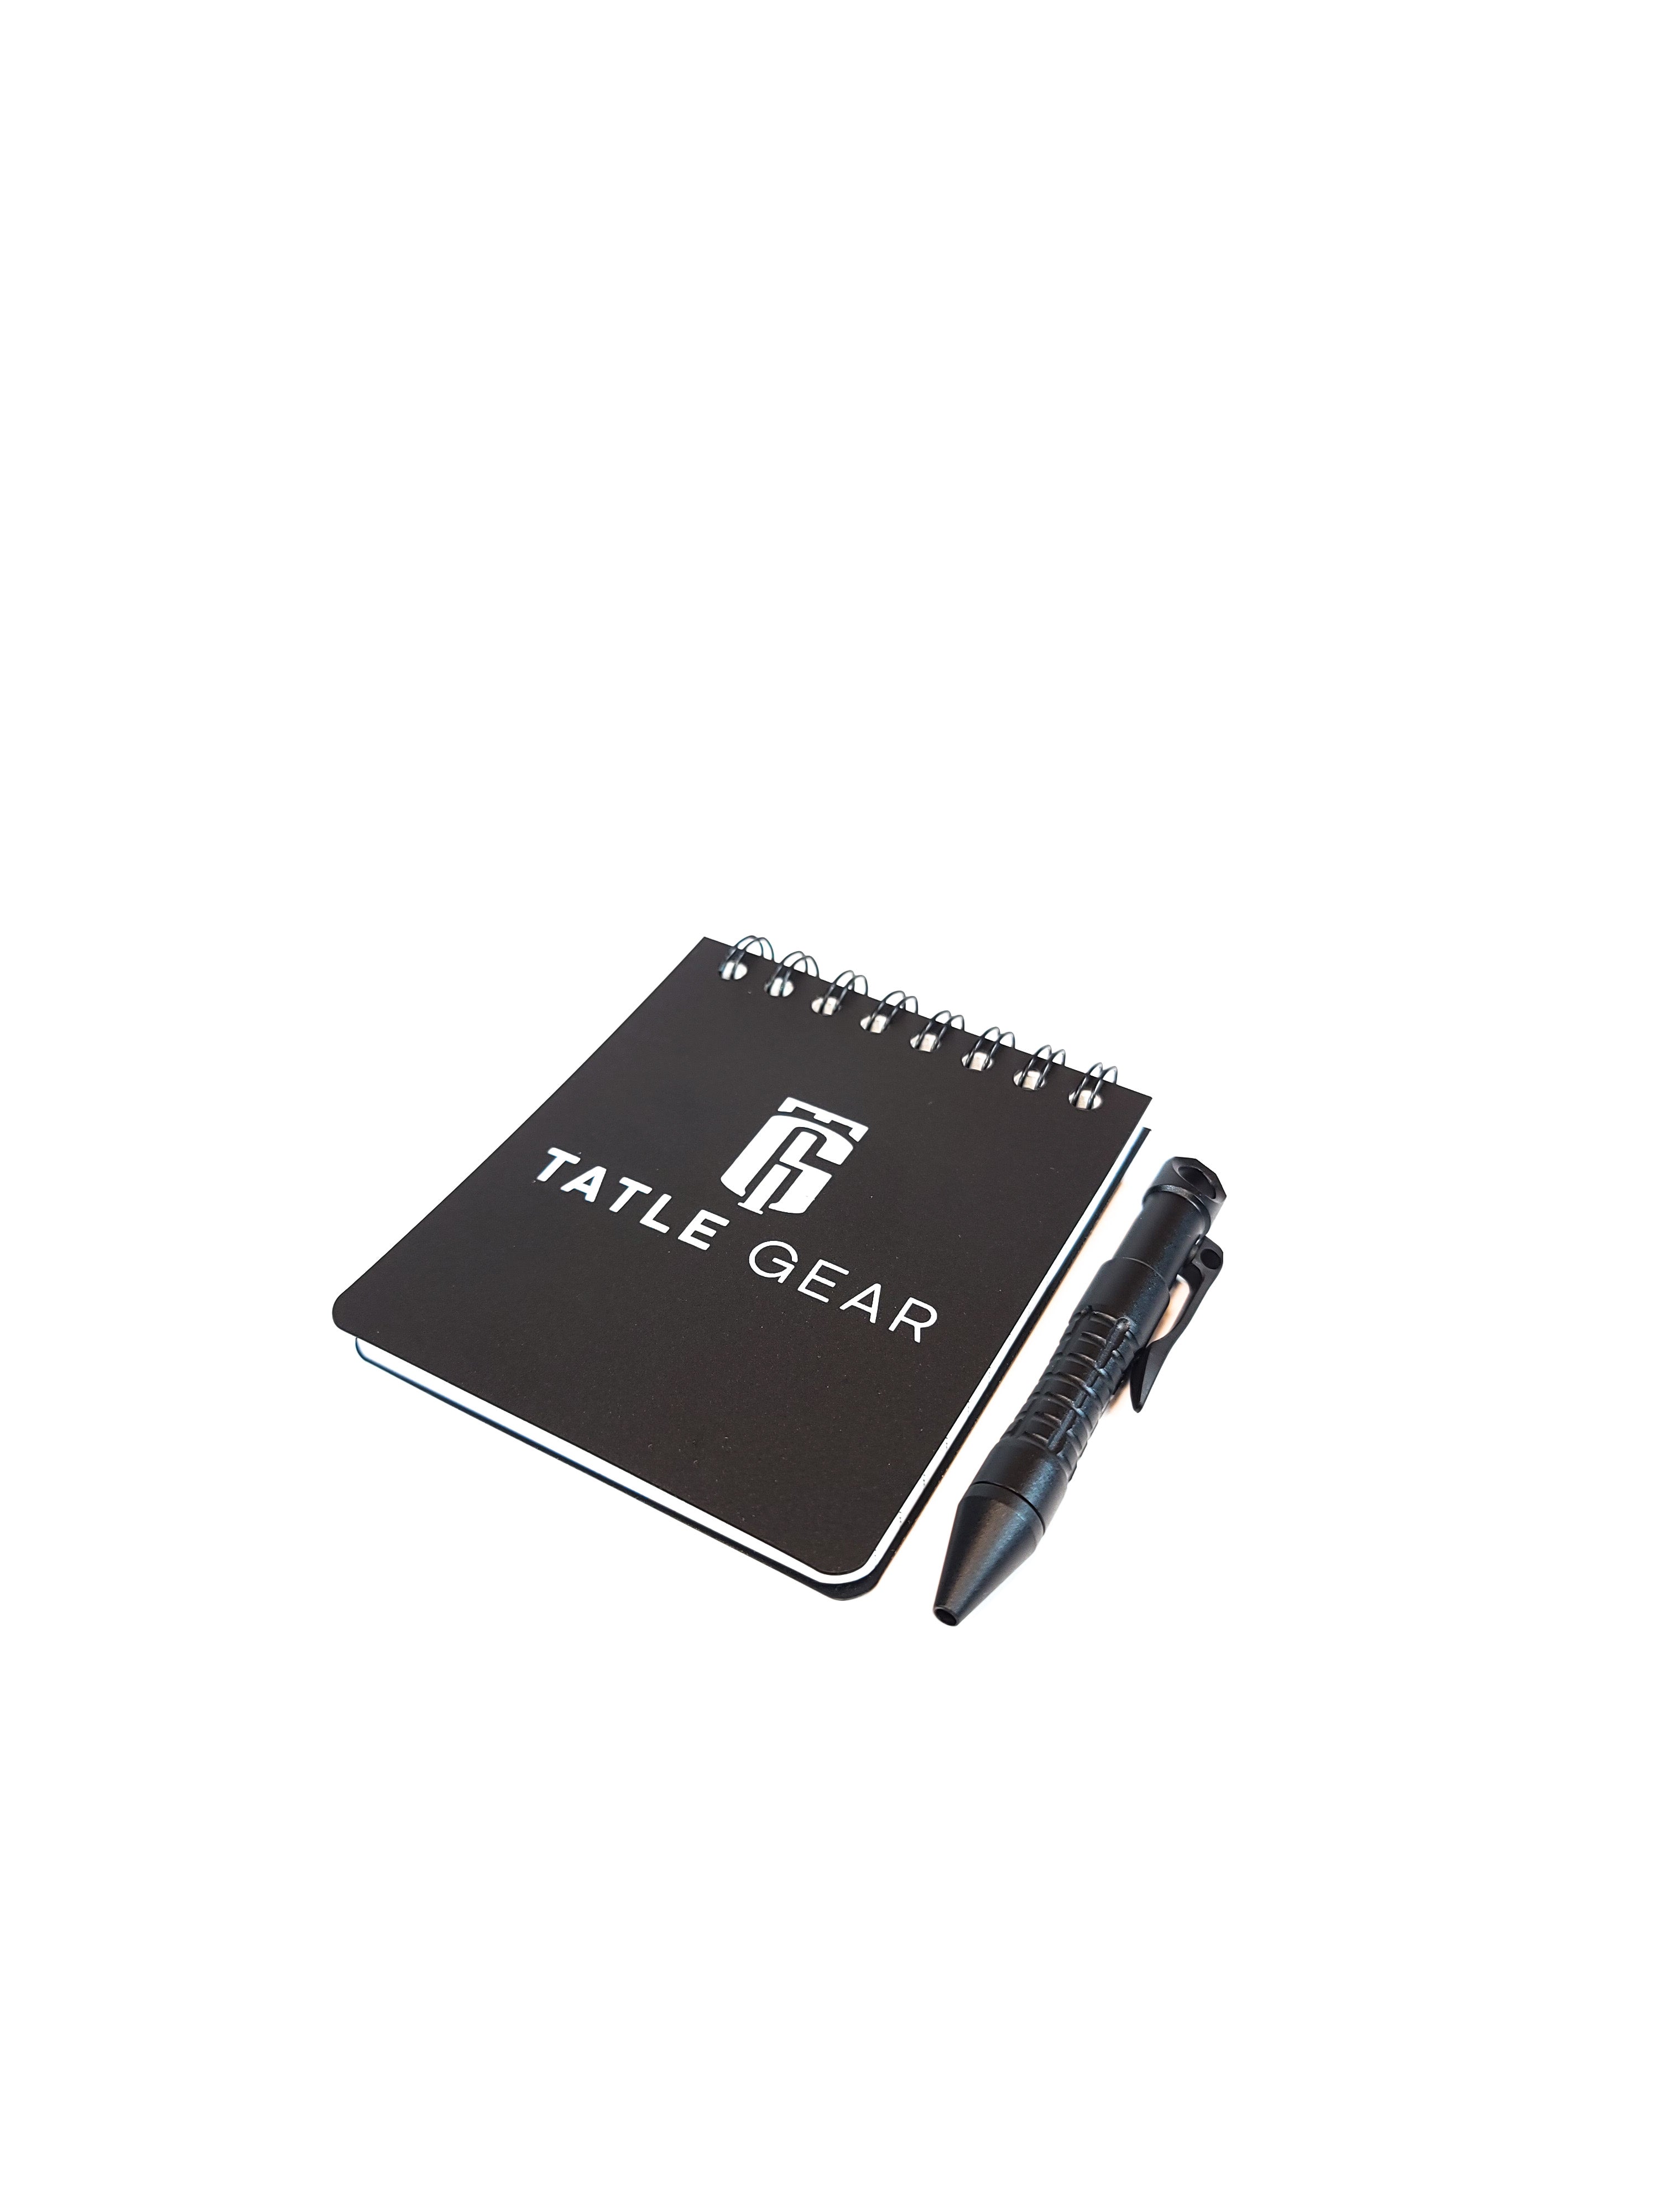 EDC Notepad Pen Elastic Pocket Organizer - Active Pro Gear